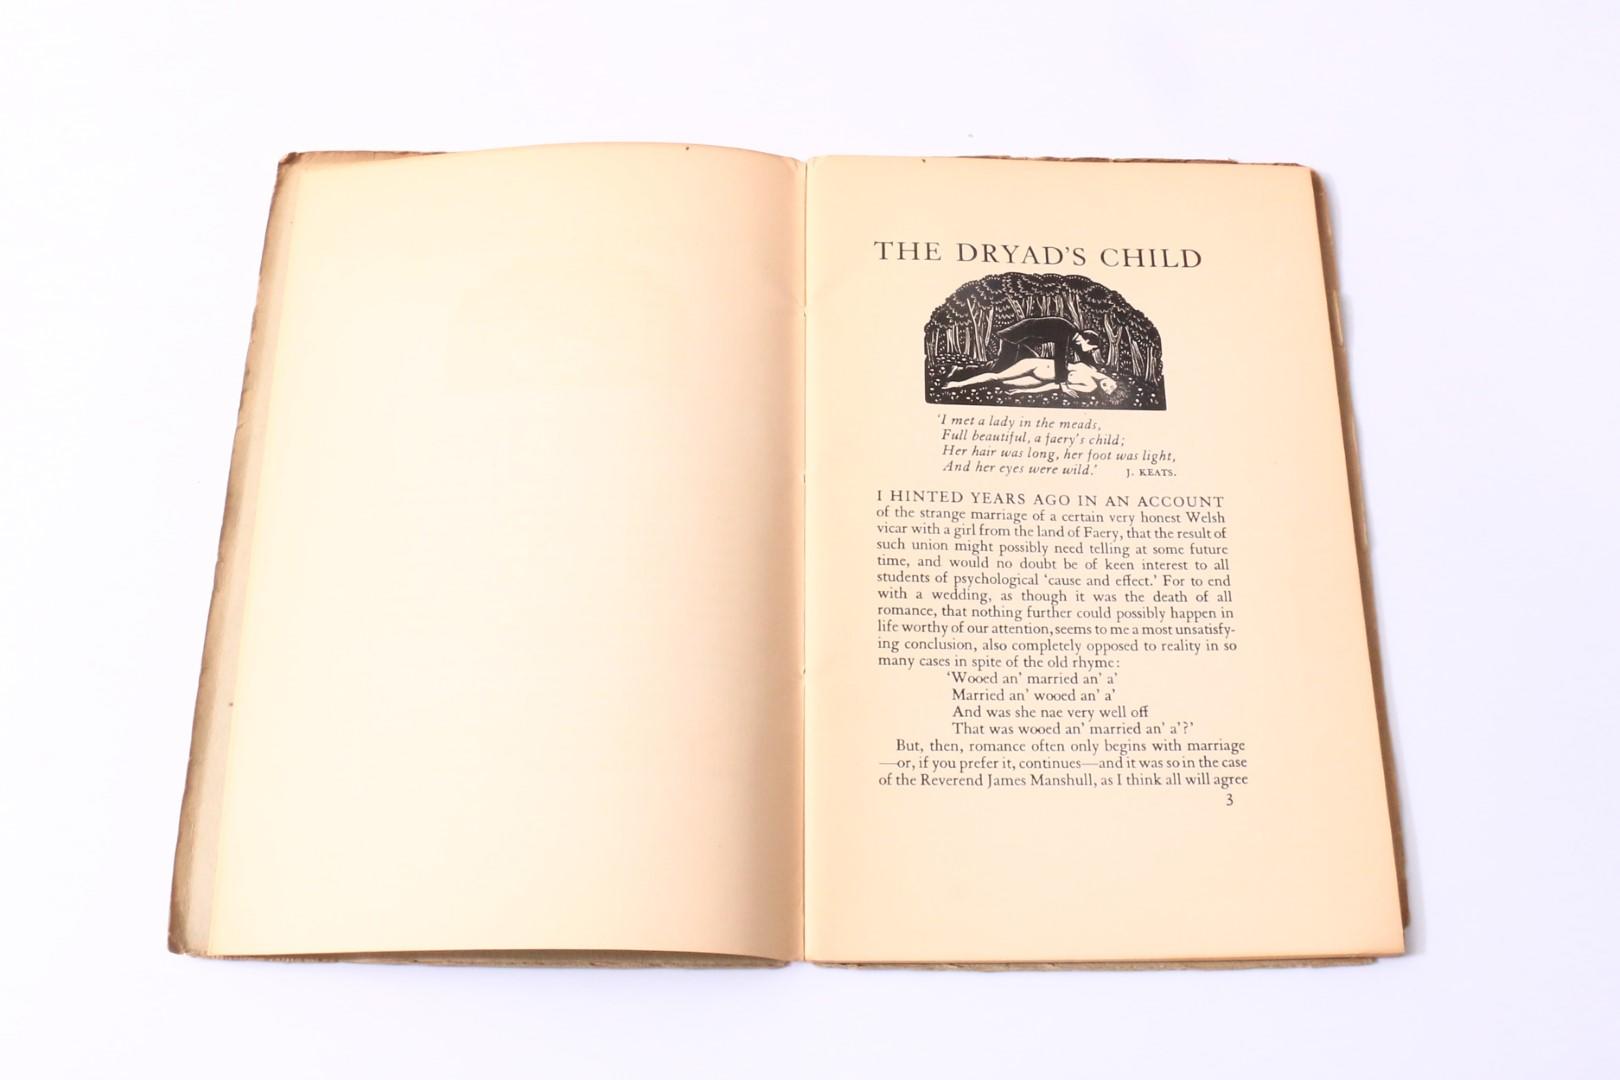 Bernard Sleigh - The Dryad's Child - City of Birmingham School of Printing, 1936, First Edition.